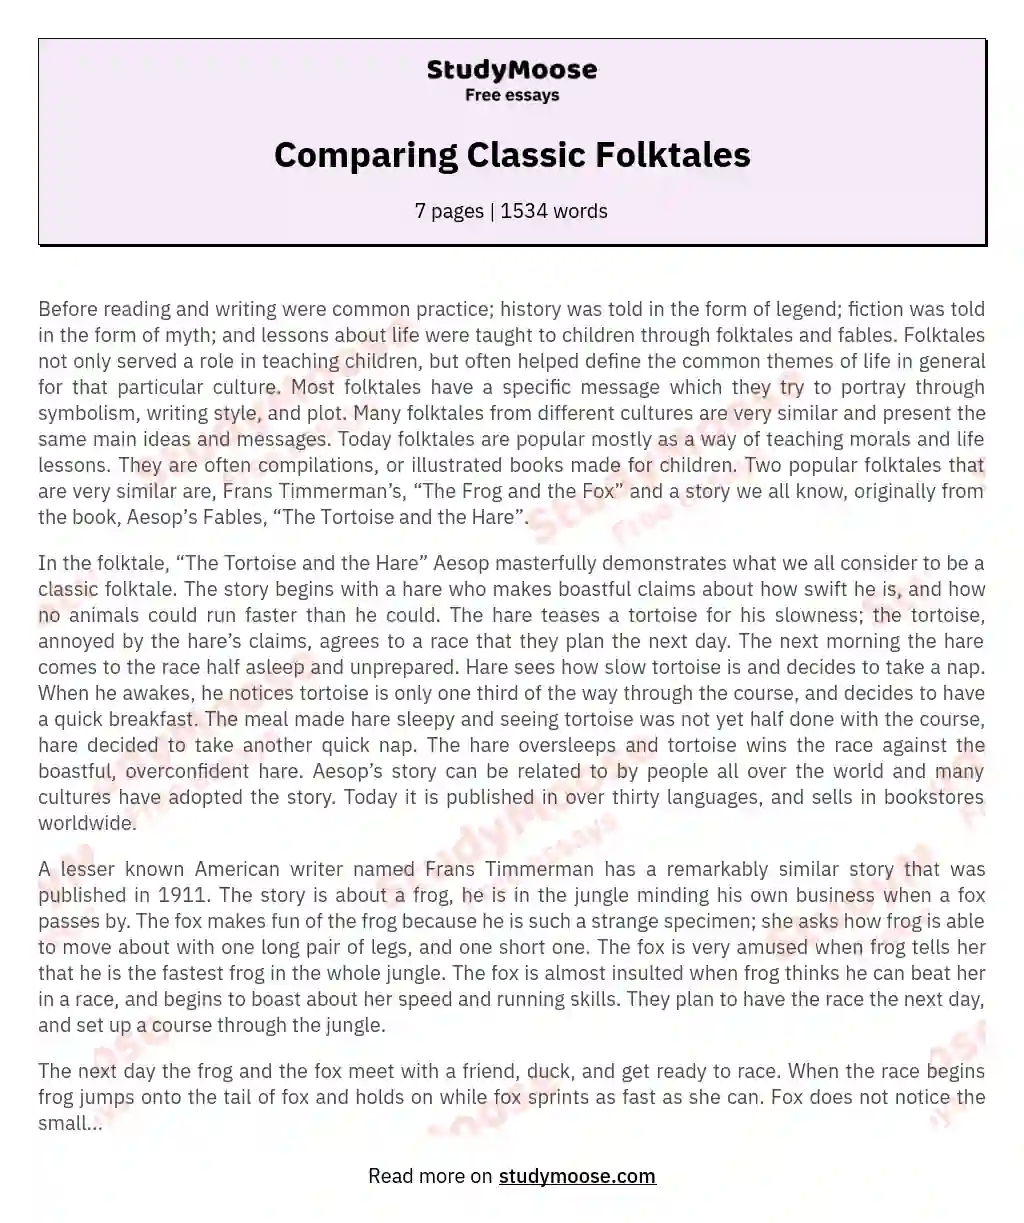 Comparing Classic Folktales essay